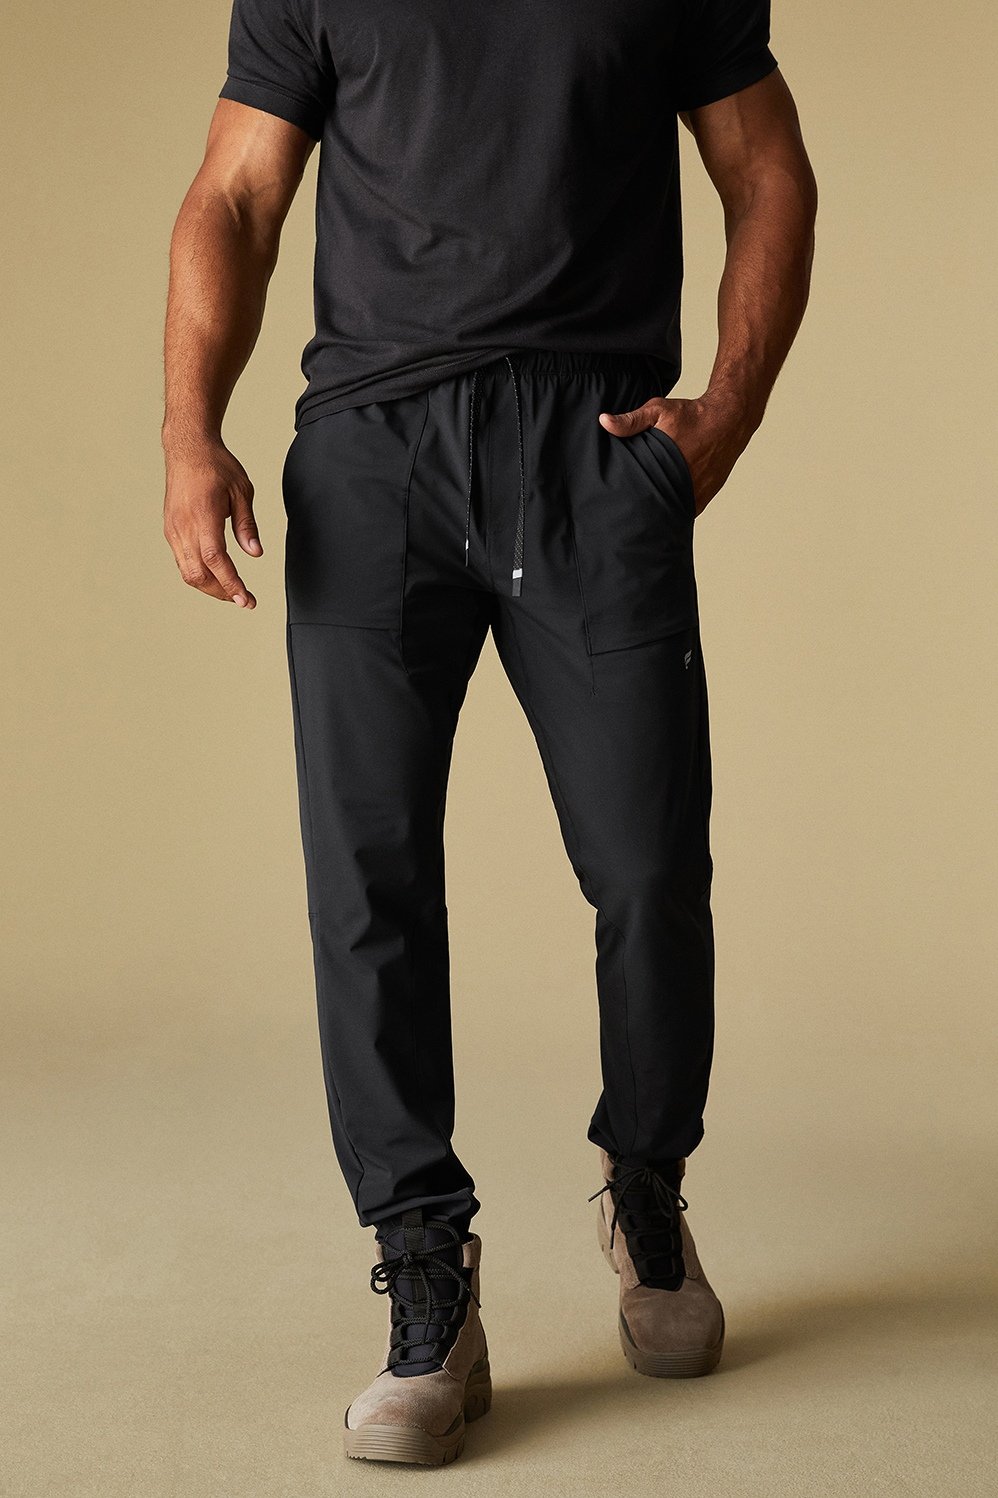 Men's Activewear & Workout Clothes - Shorts, Pants, Joggers & More